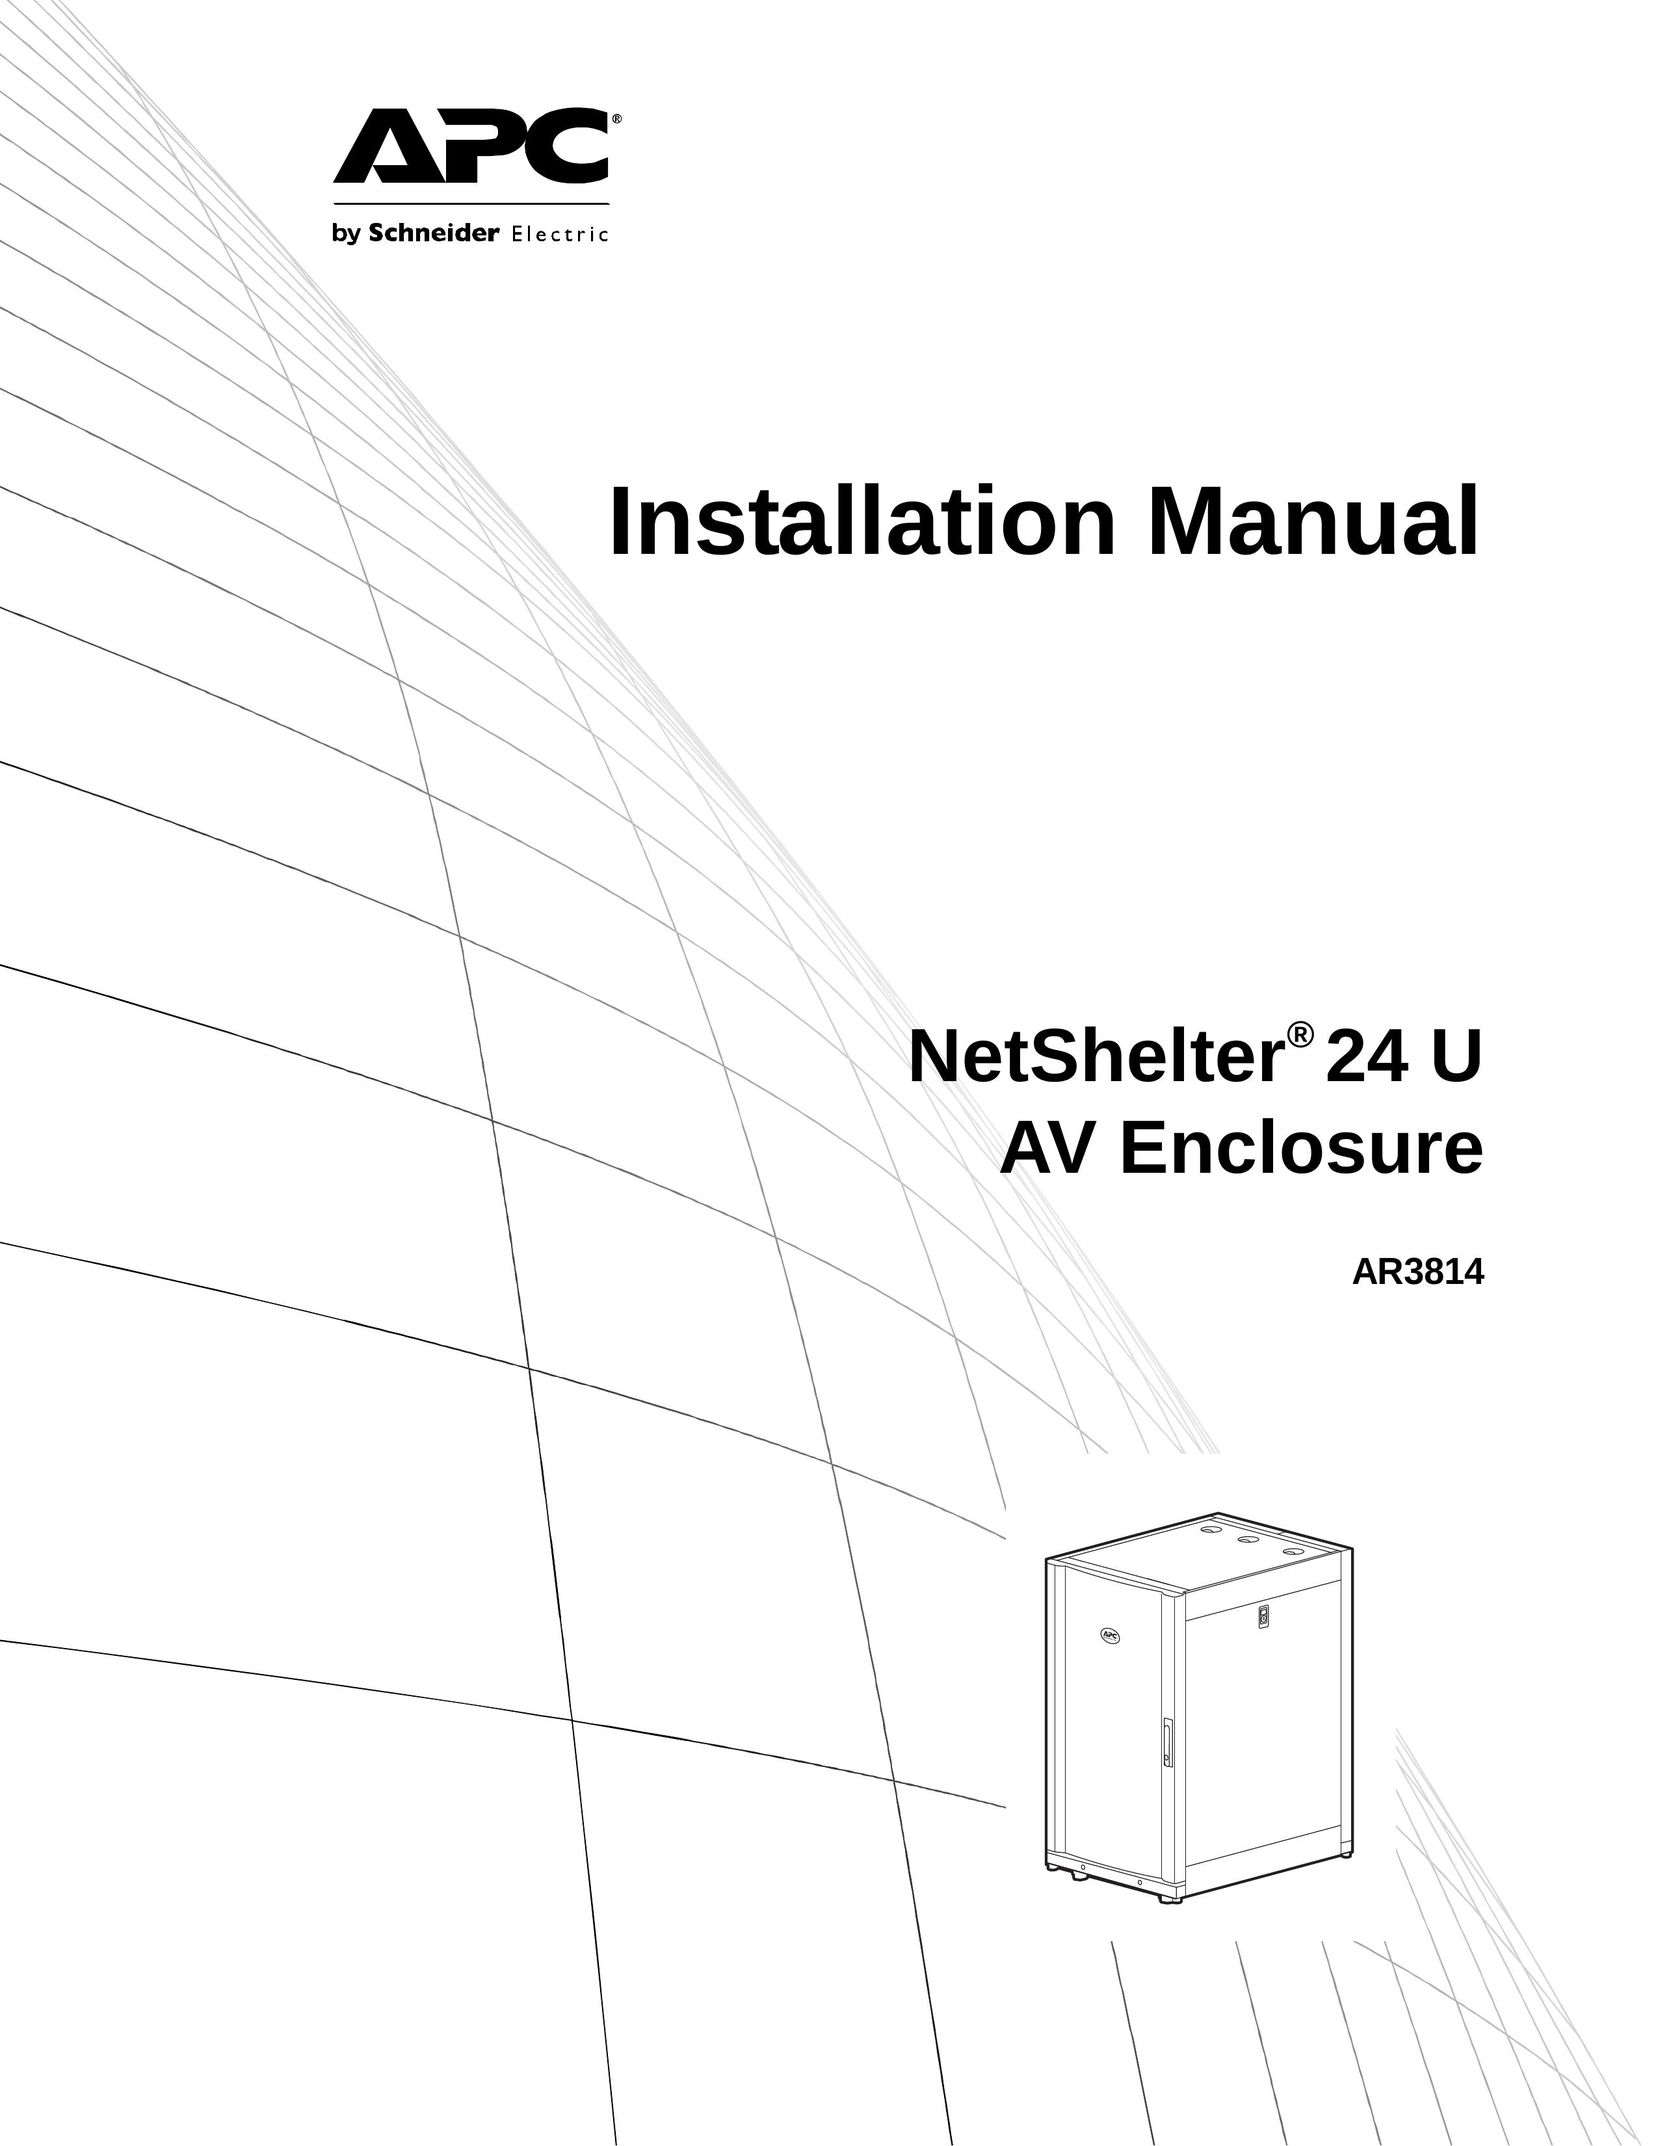 APC AR3814 Indoor Furnishings User Manual